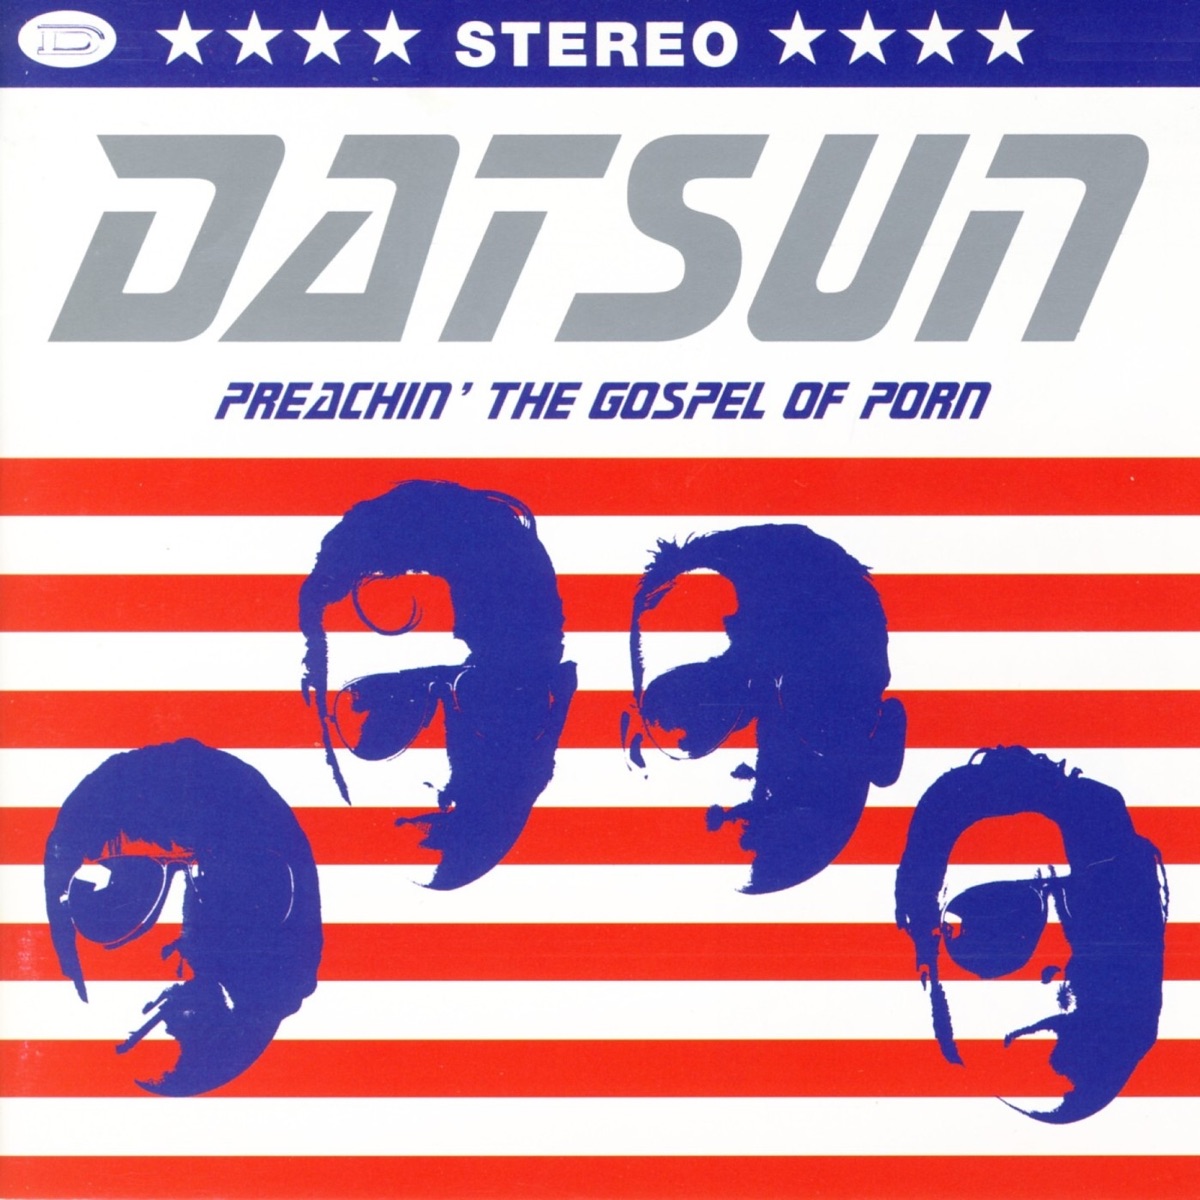 Preachin' The Gospel of Porn (Extended Version) - Album by Datsun - Apple  Music